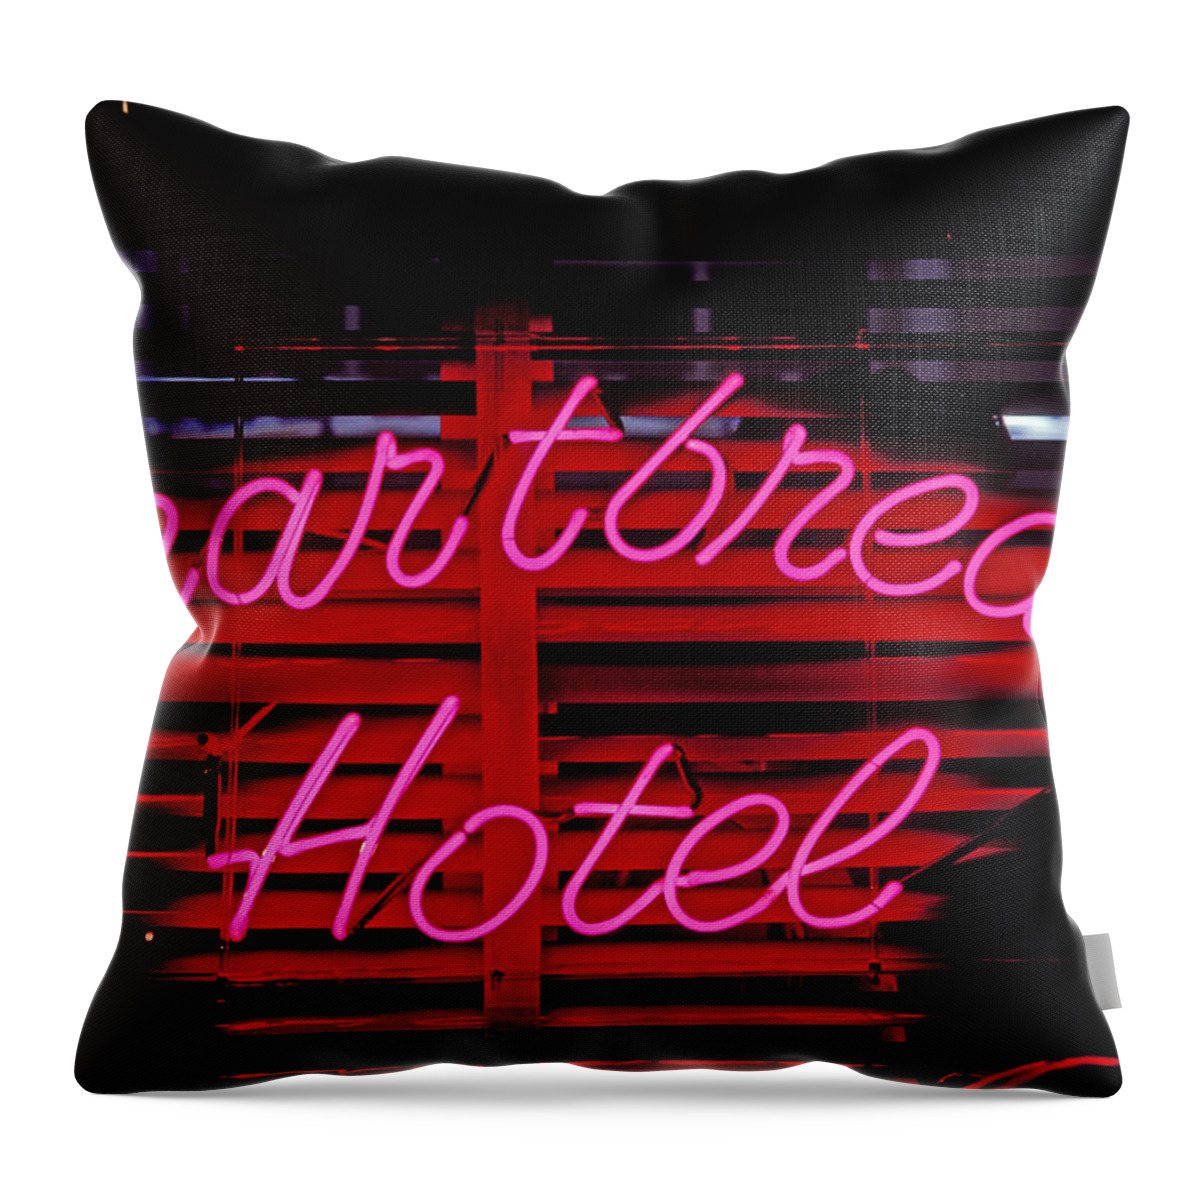 Heartbreak Throw Pillow featuring the photograph Heartbreak hotel neon by Garry Gay